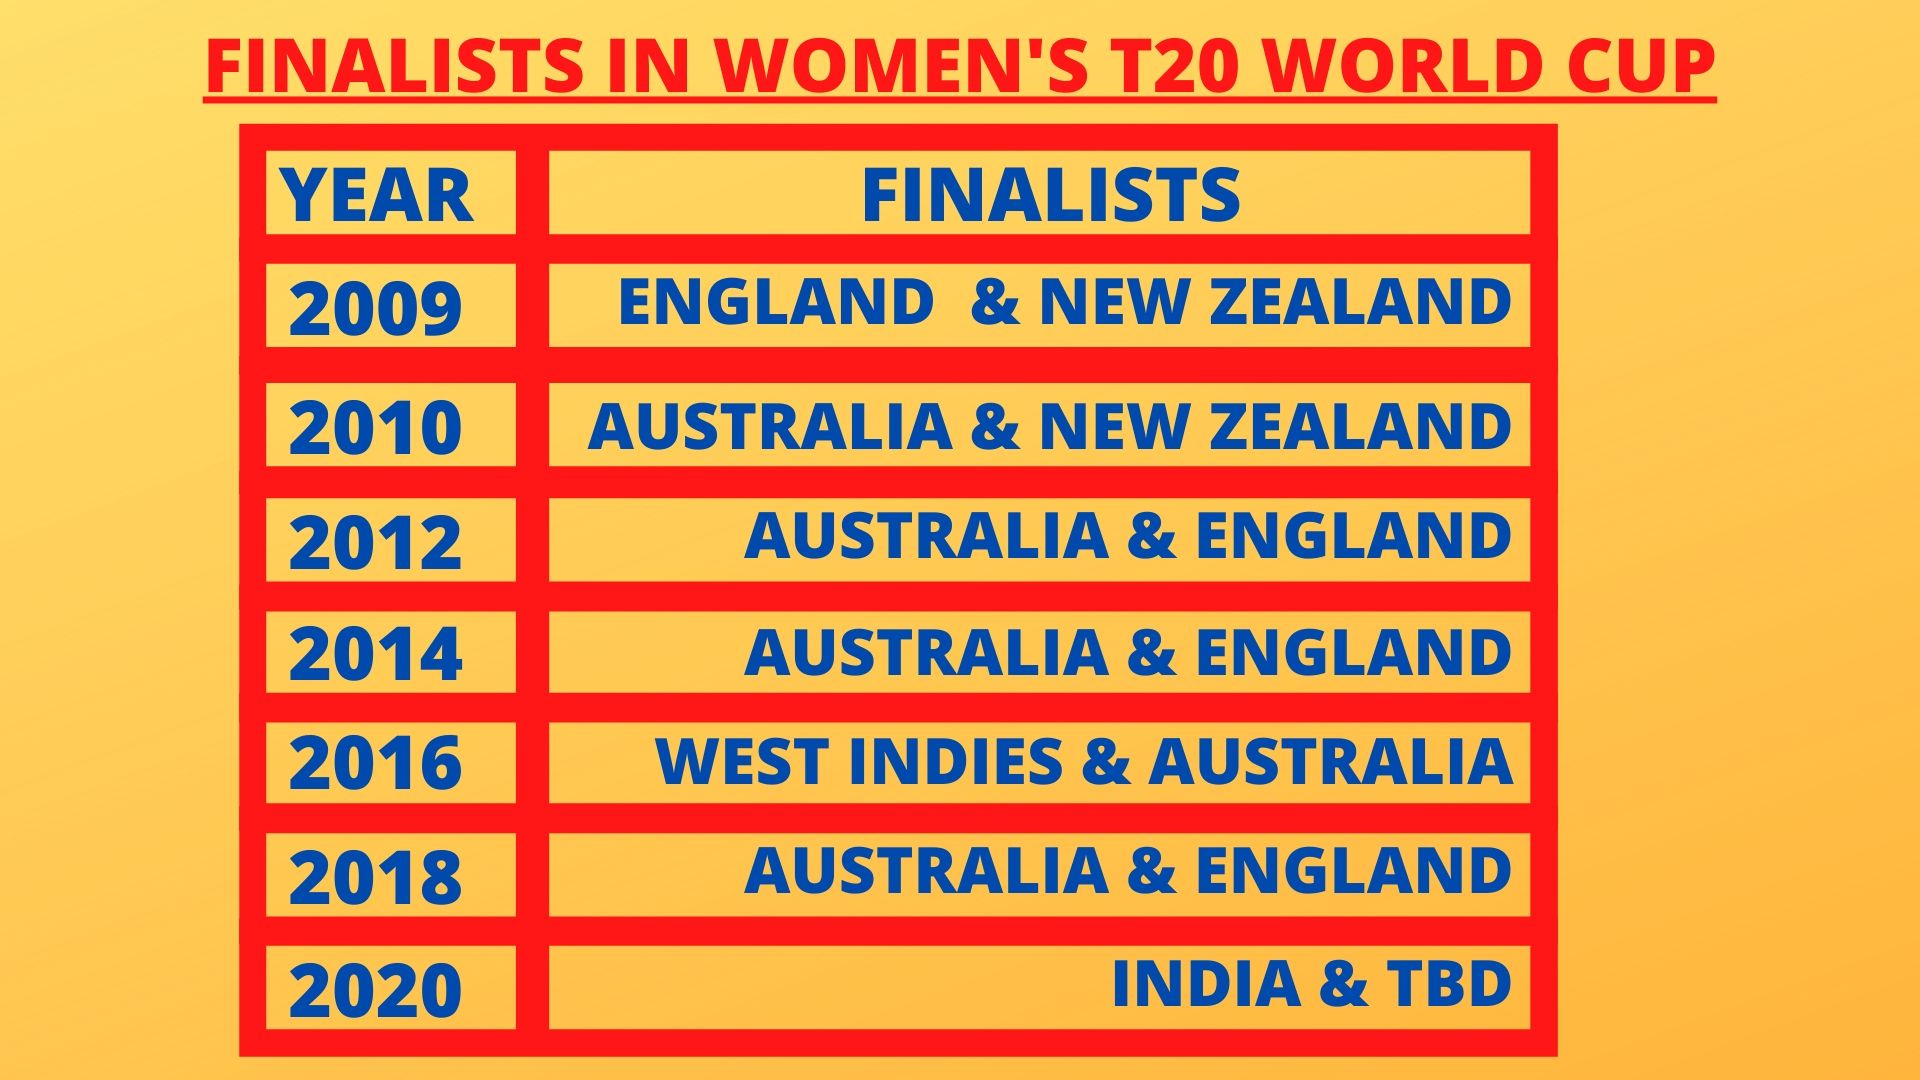 List of Finalists in Women's T20 World Cup